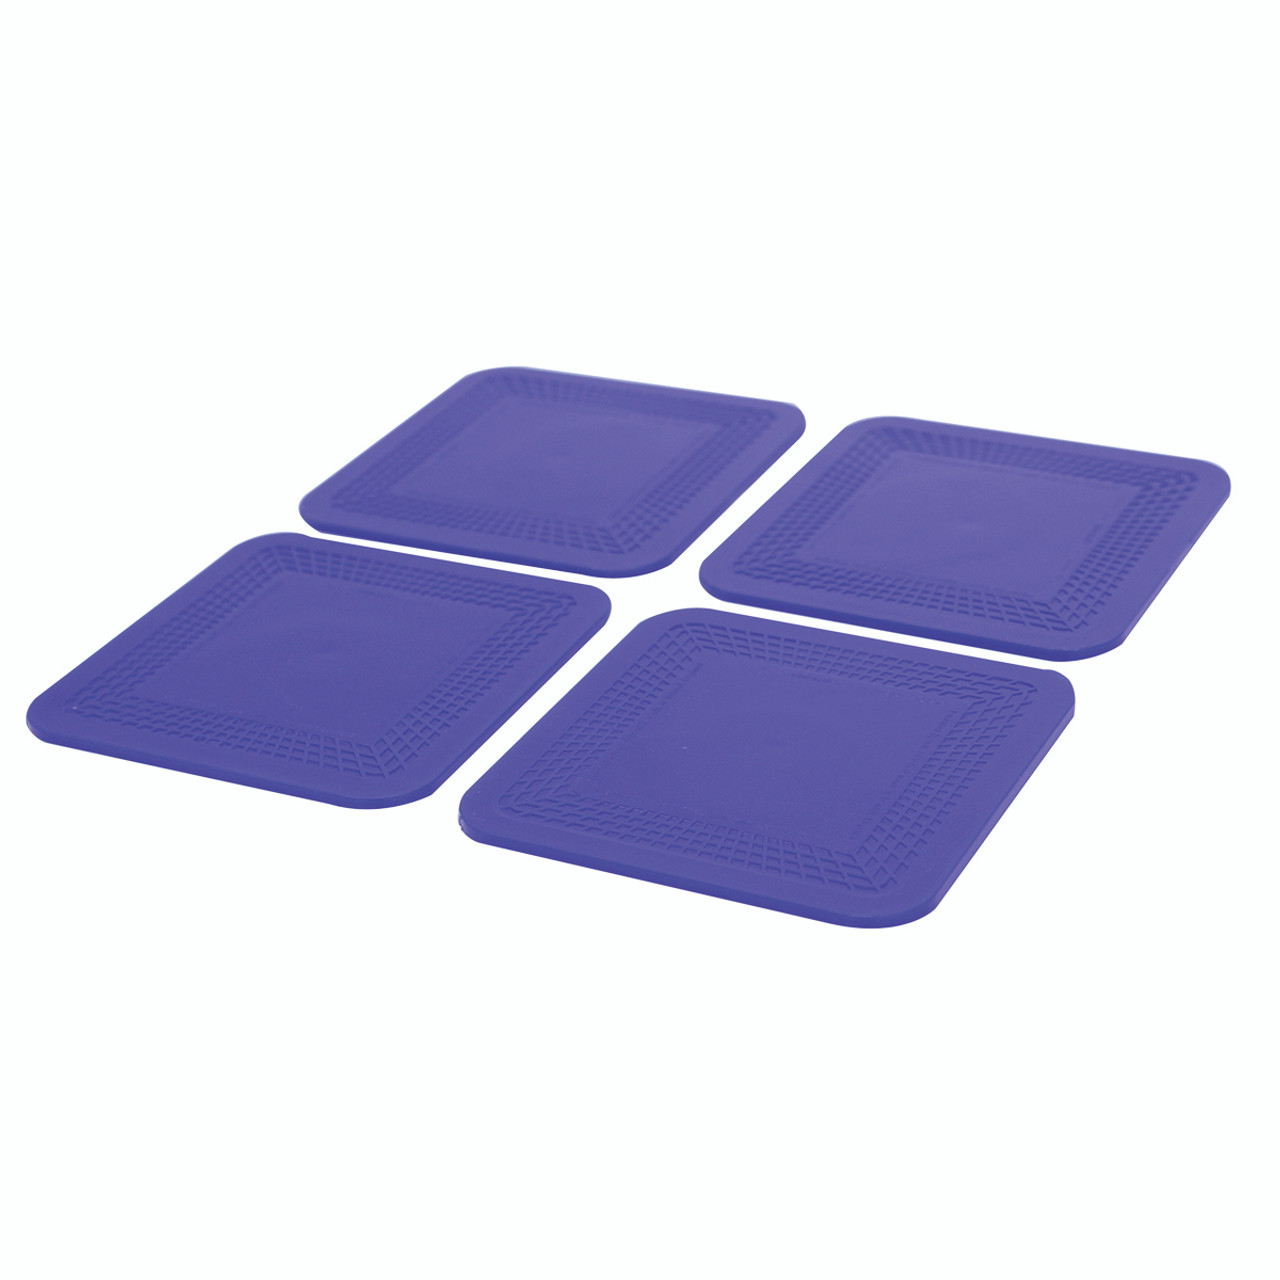 Dycem¨ non-slip square coasters, set of 4, blue